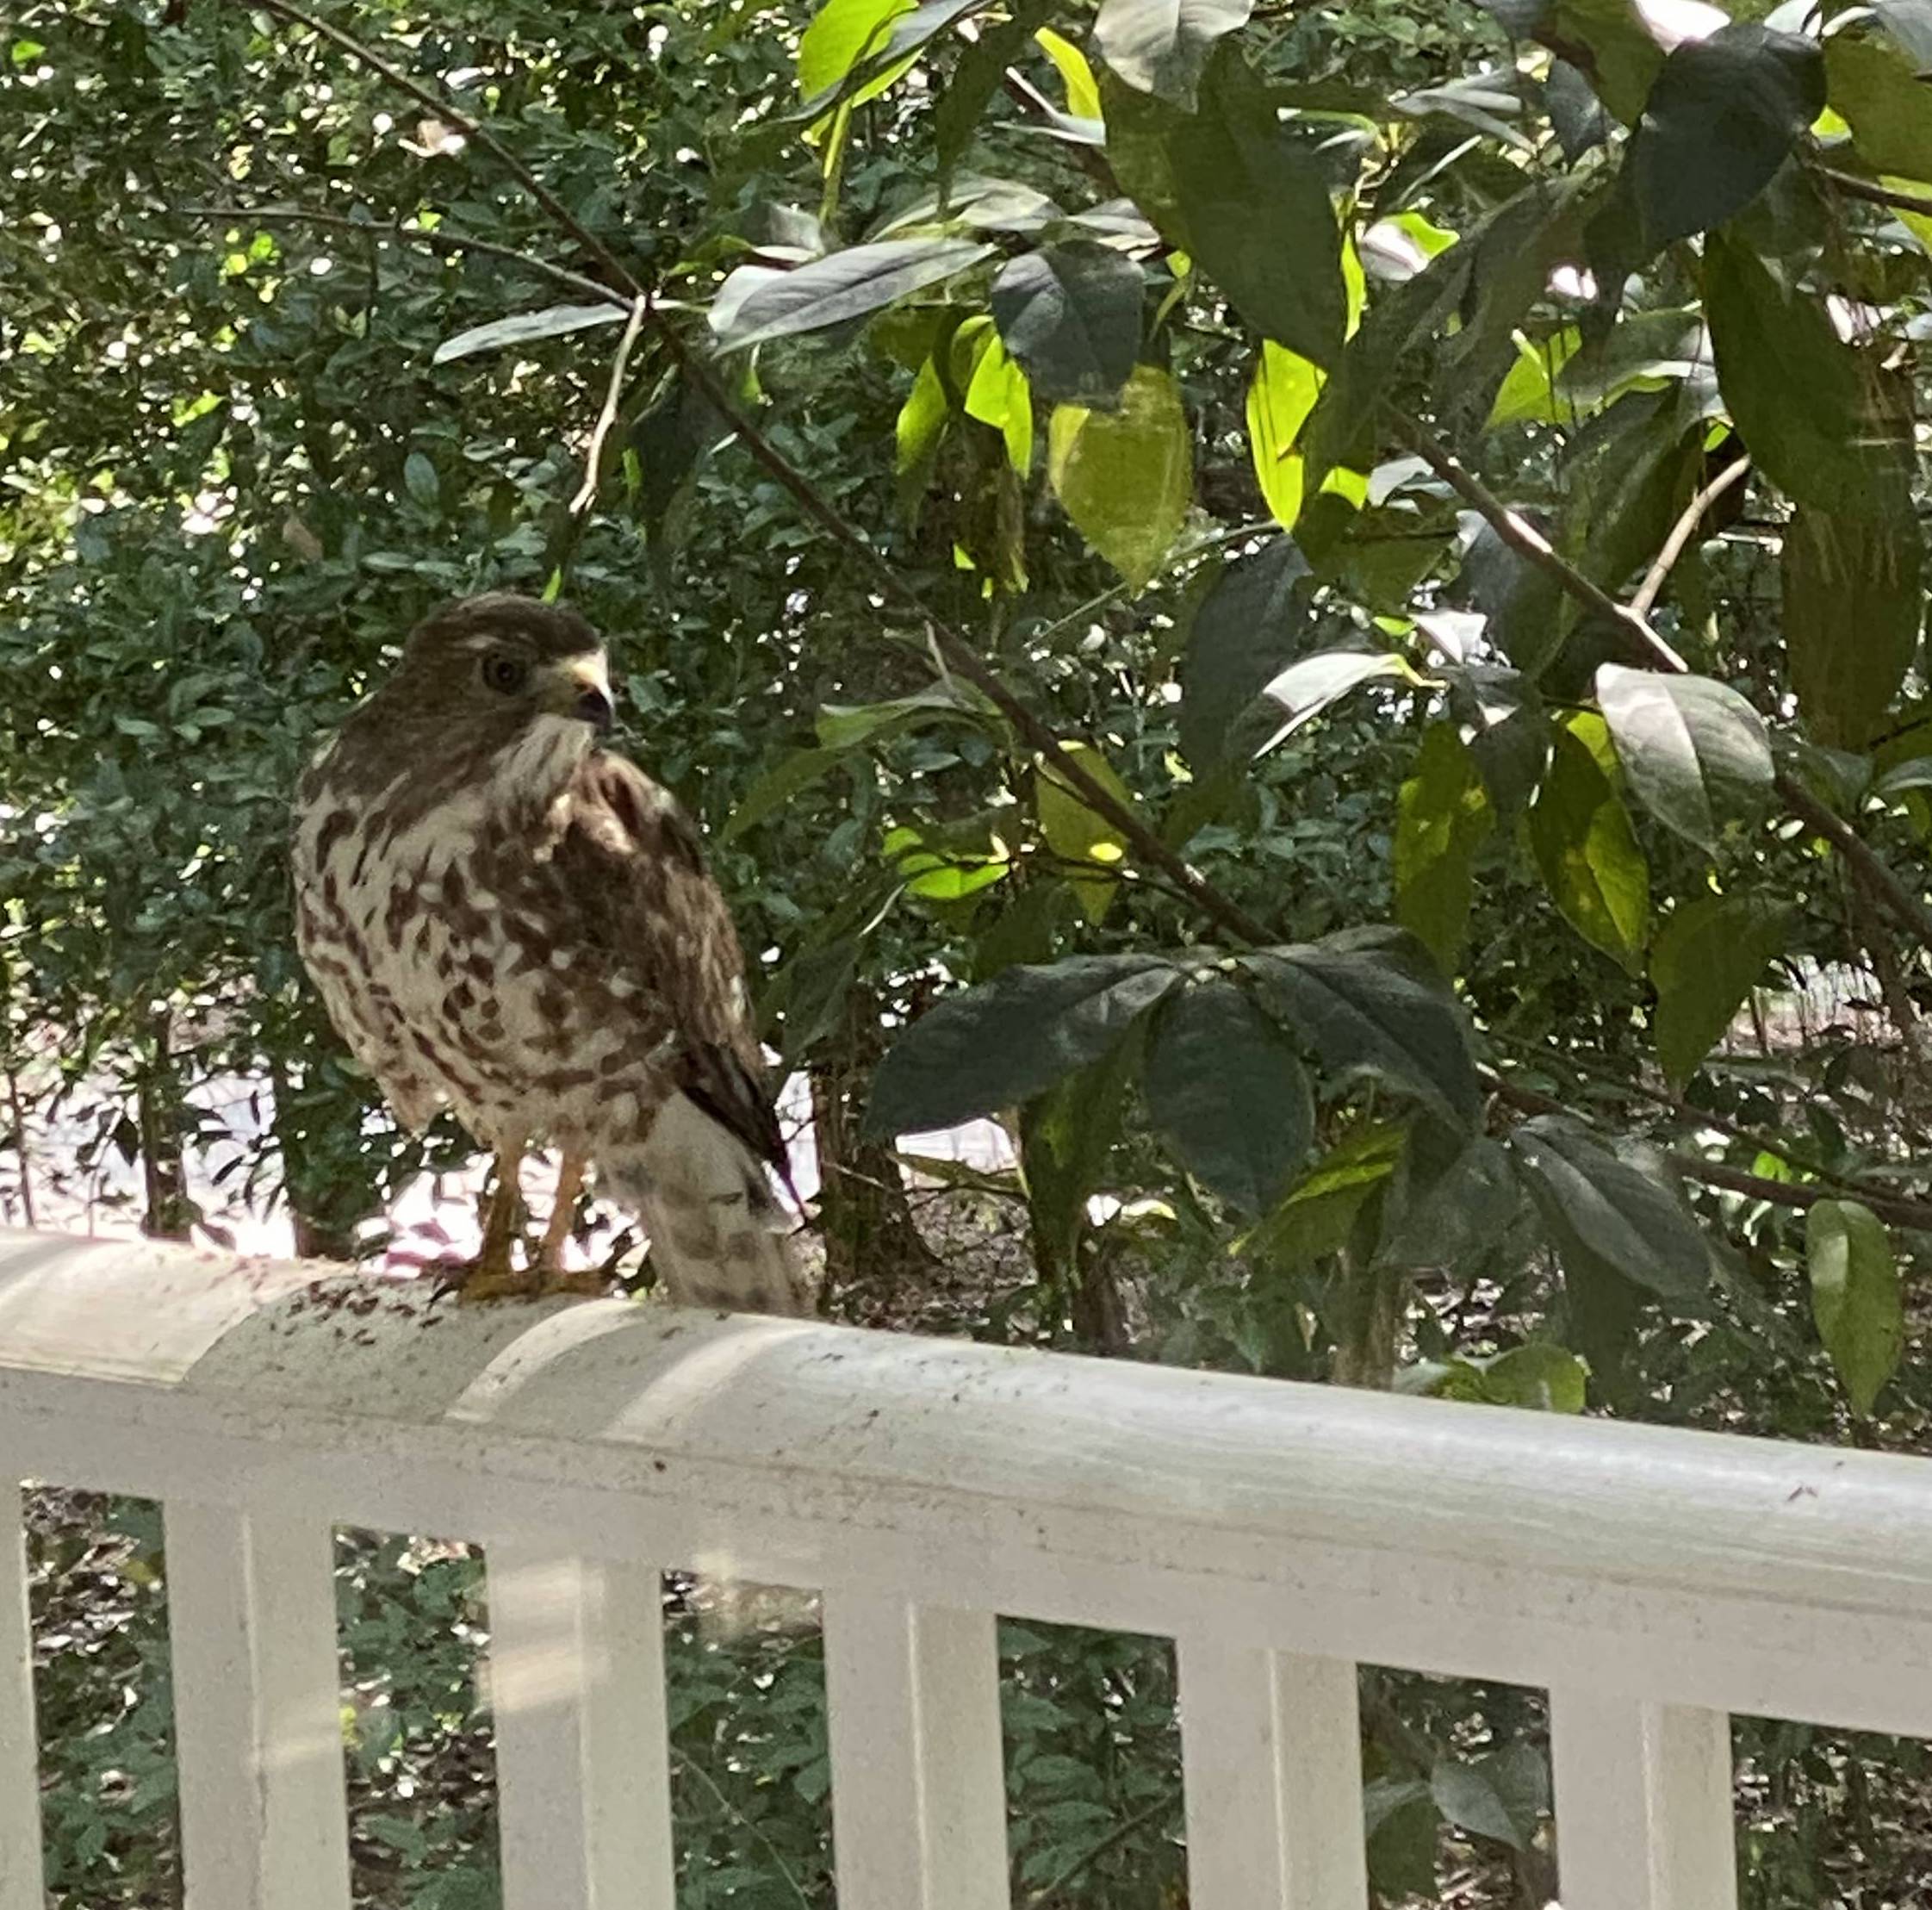 Broad-winged Hawk on Porch Railing